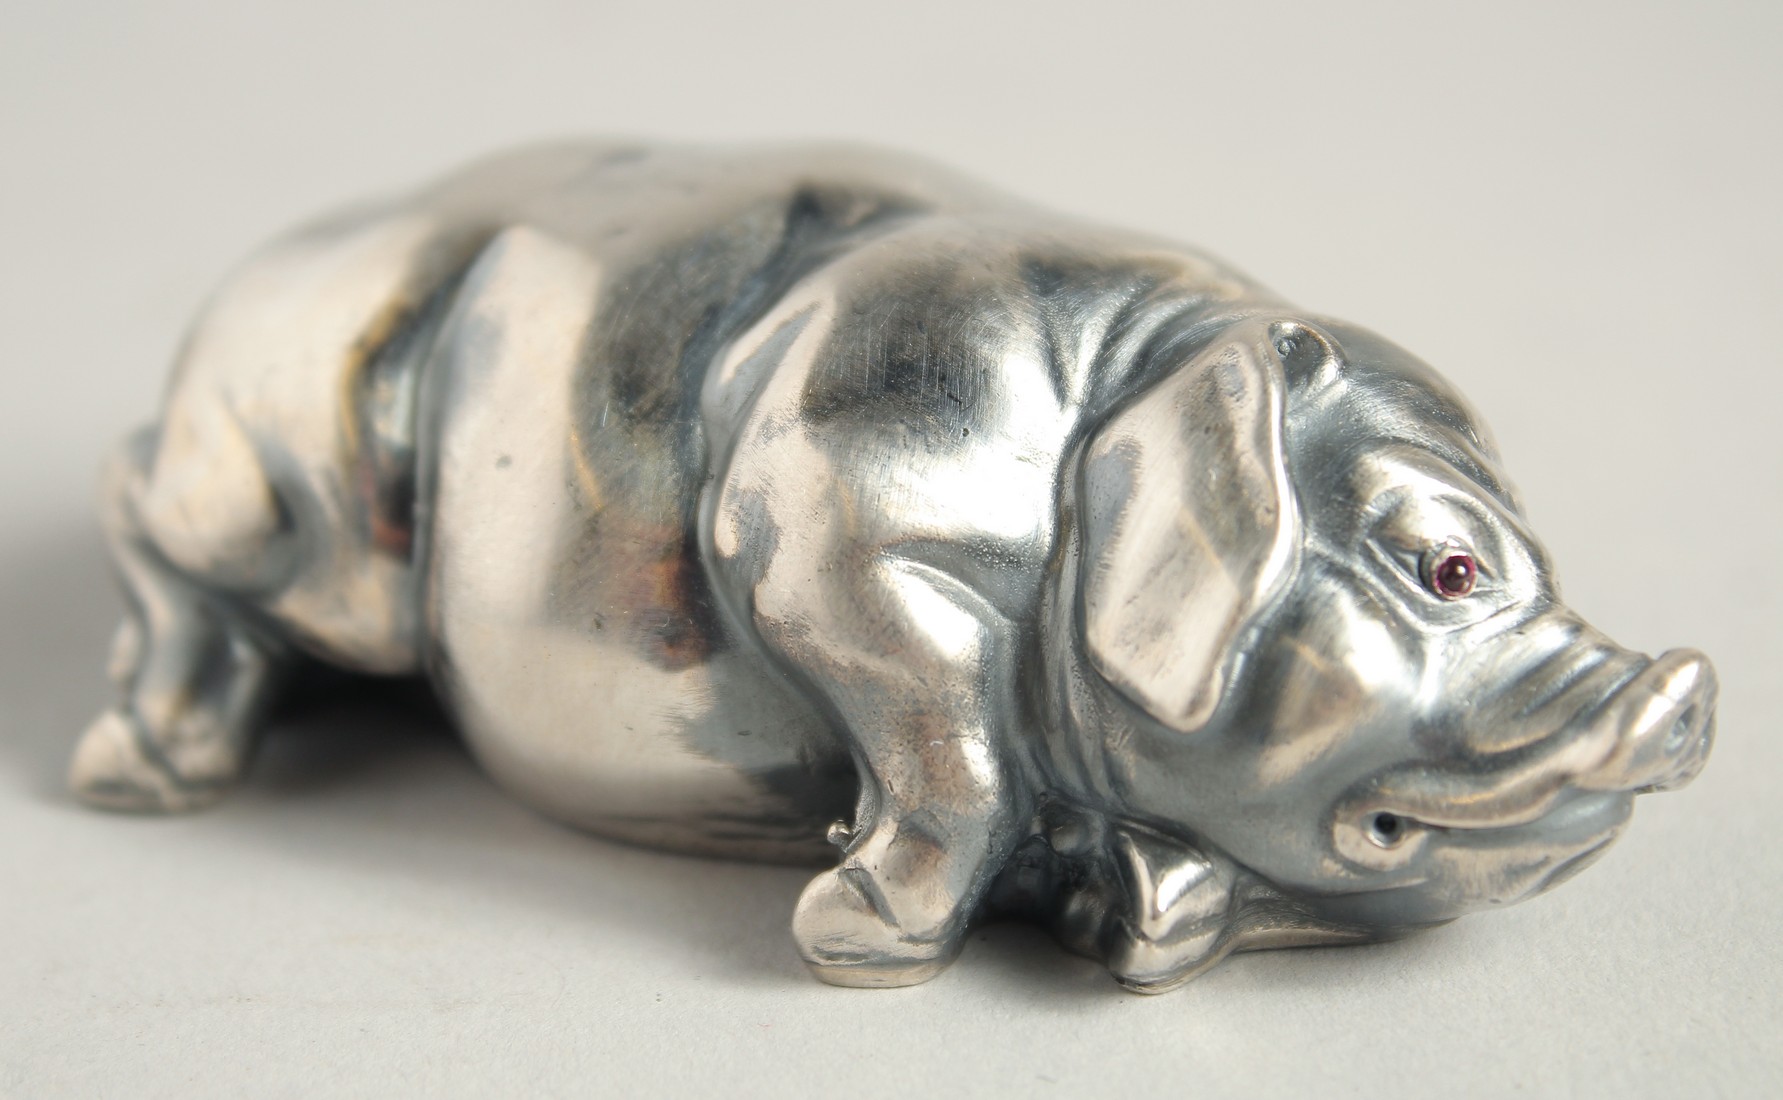 A SMALL RUSSIAN SILVER SLEEPING PIG, 2.75ins long. Mark I.P. Head 84, Eagle, Faberge mark.